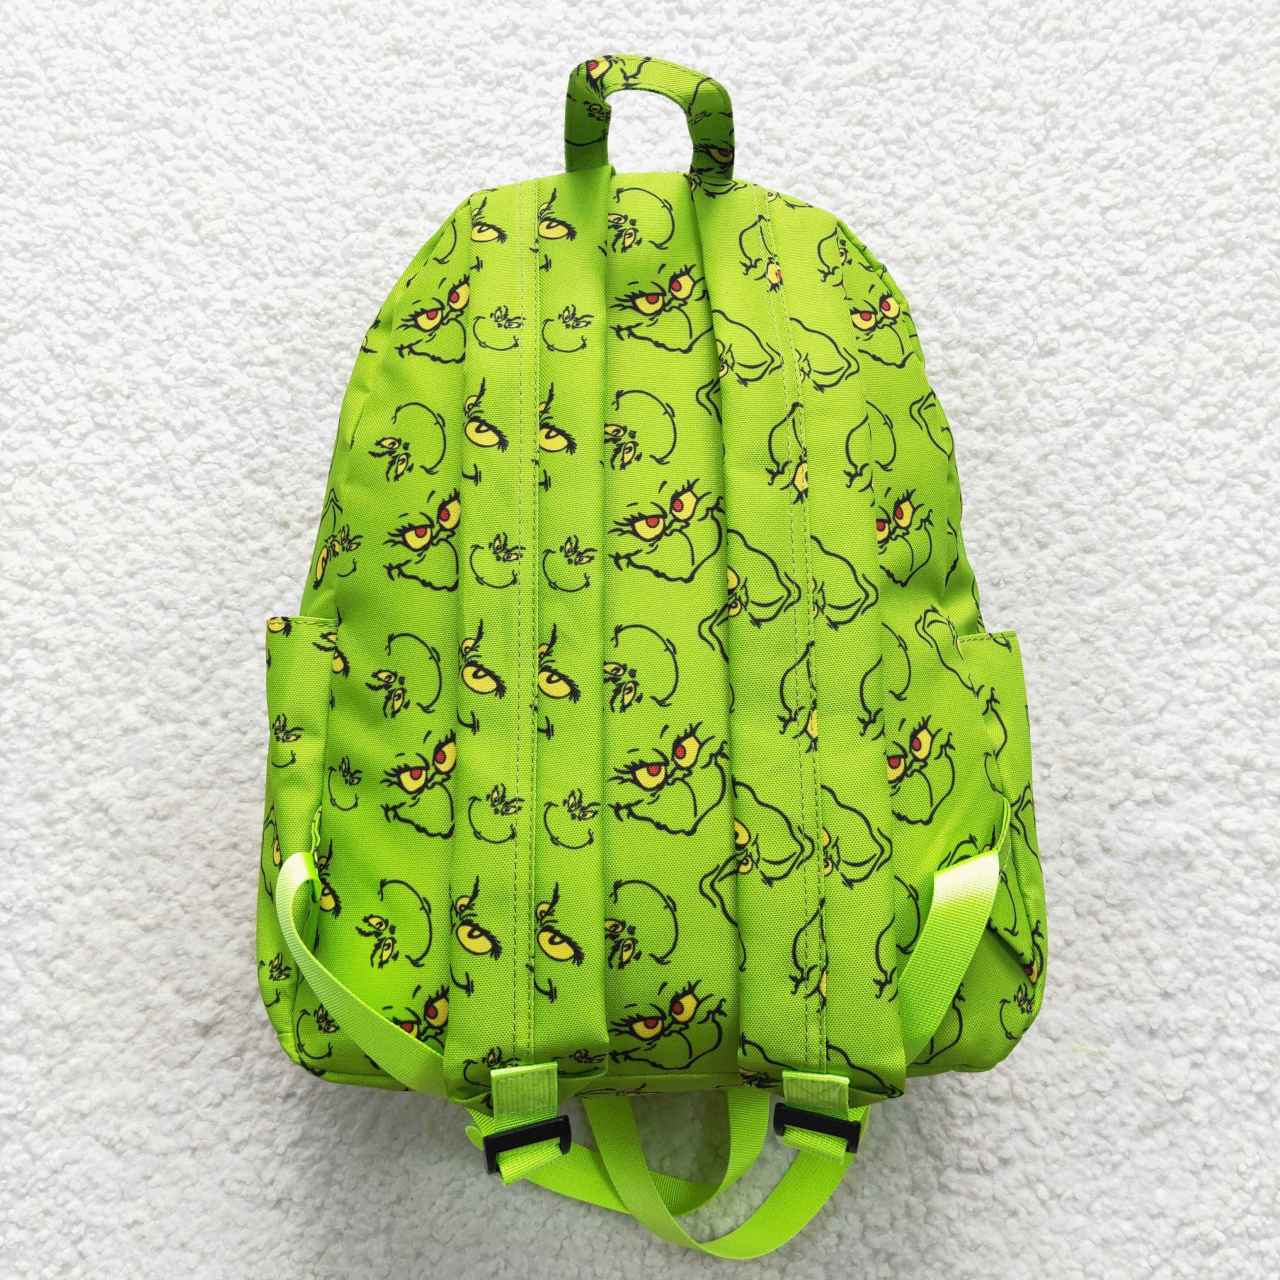 Grinchey print kids school backpack bag for christmas